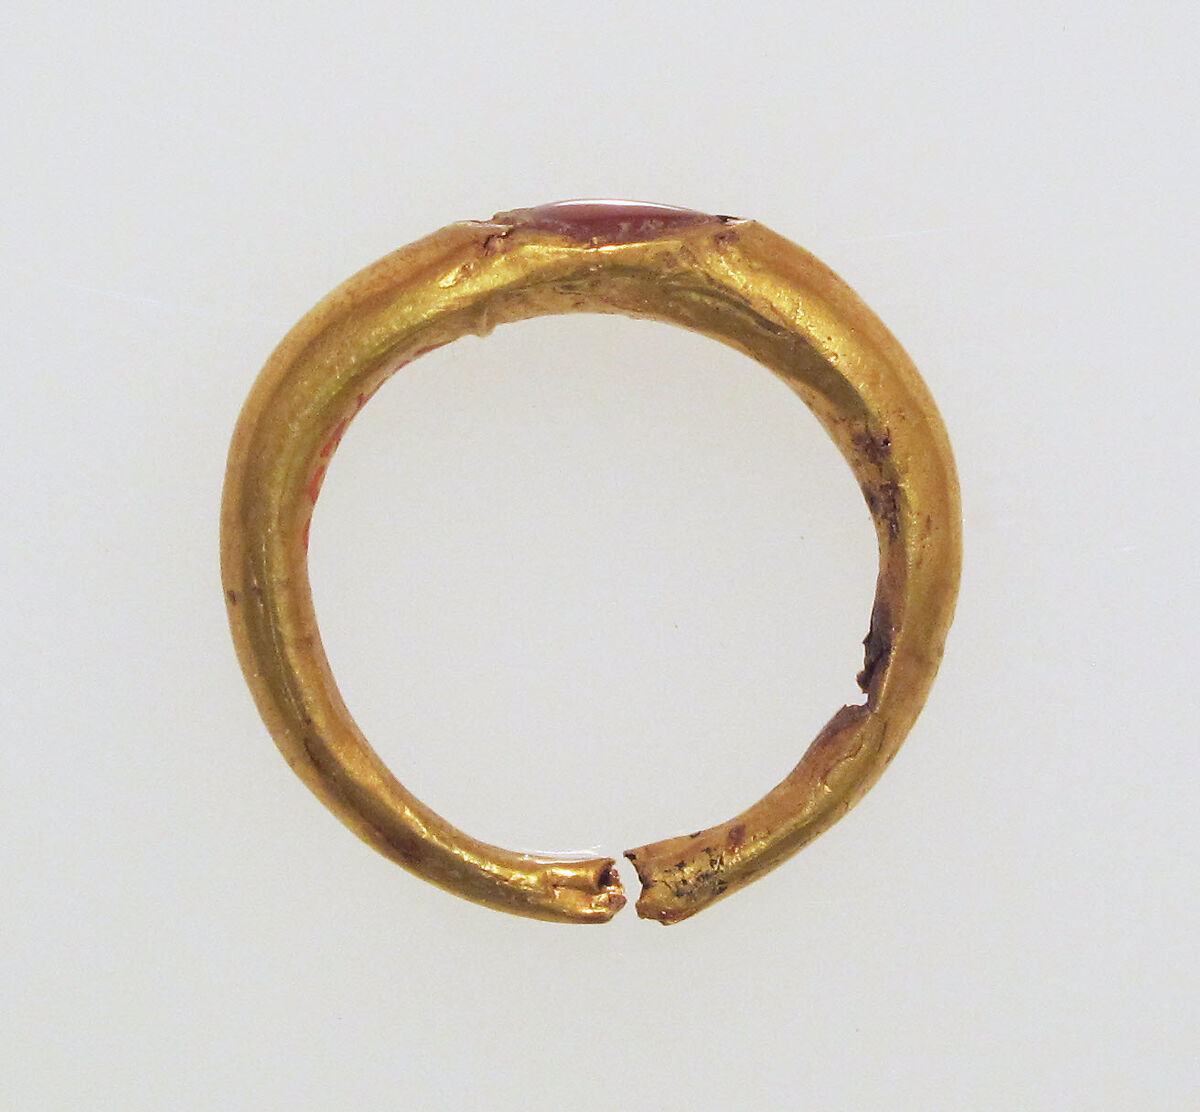 Ring with sard, Gold, sard 